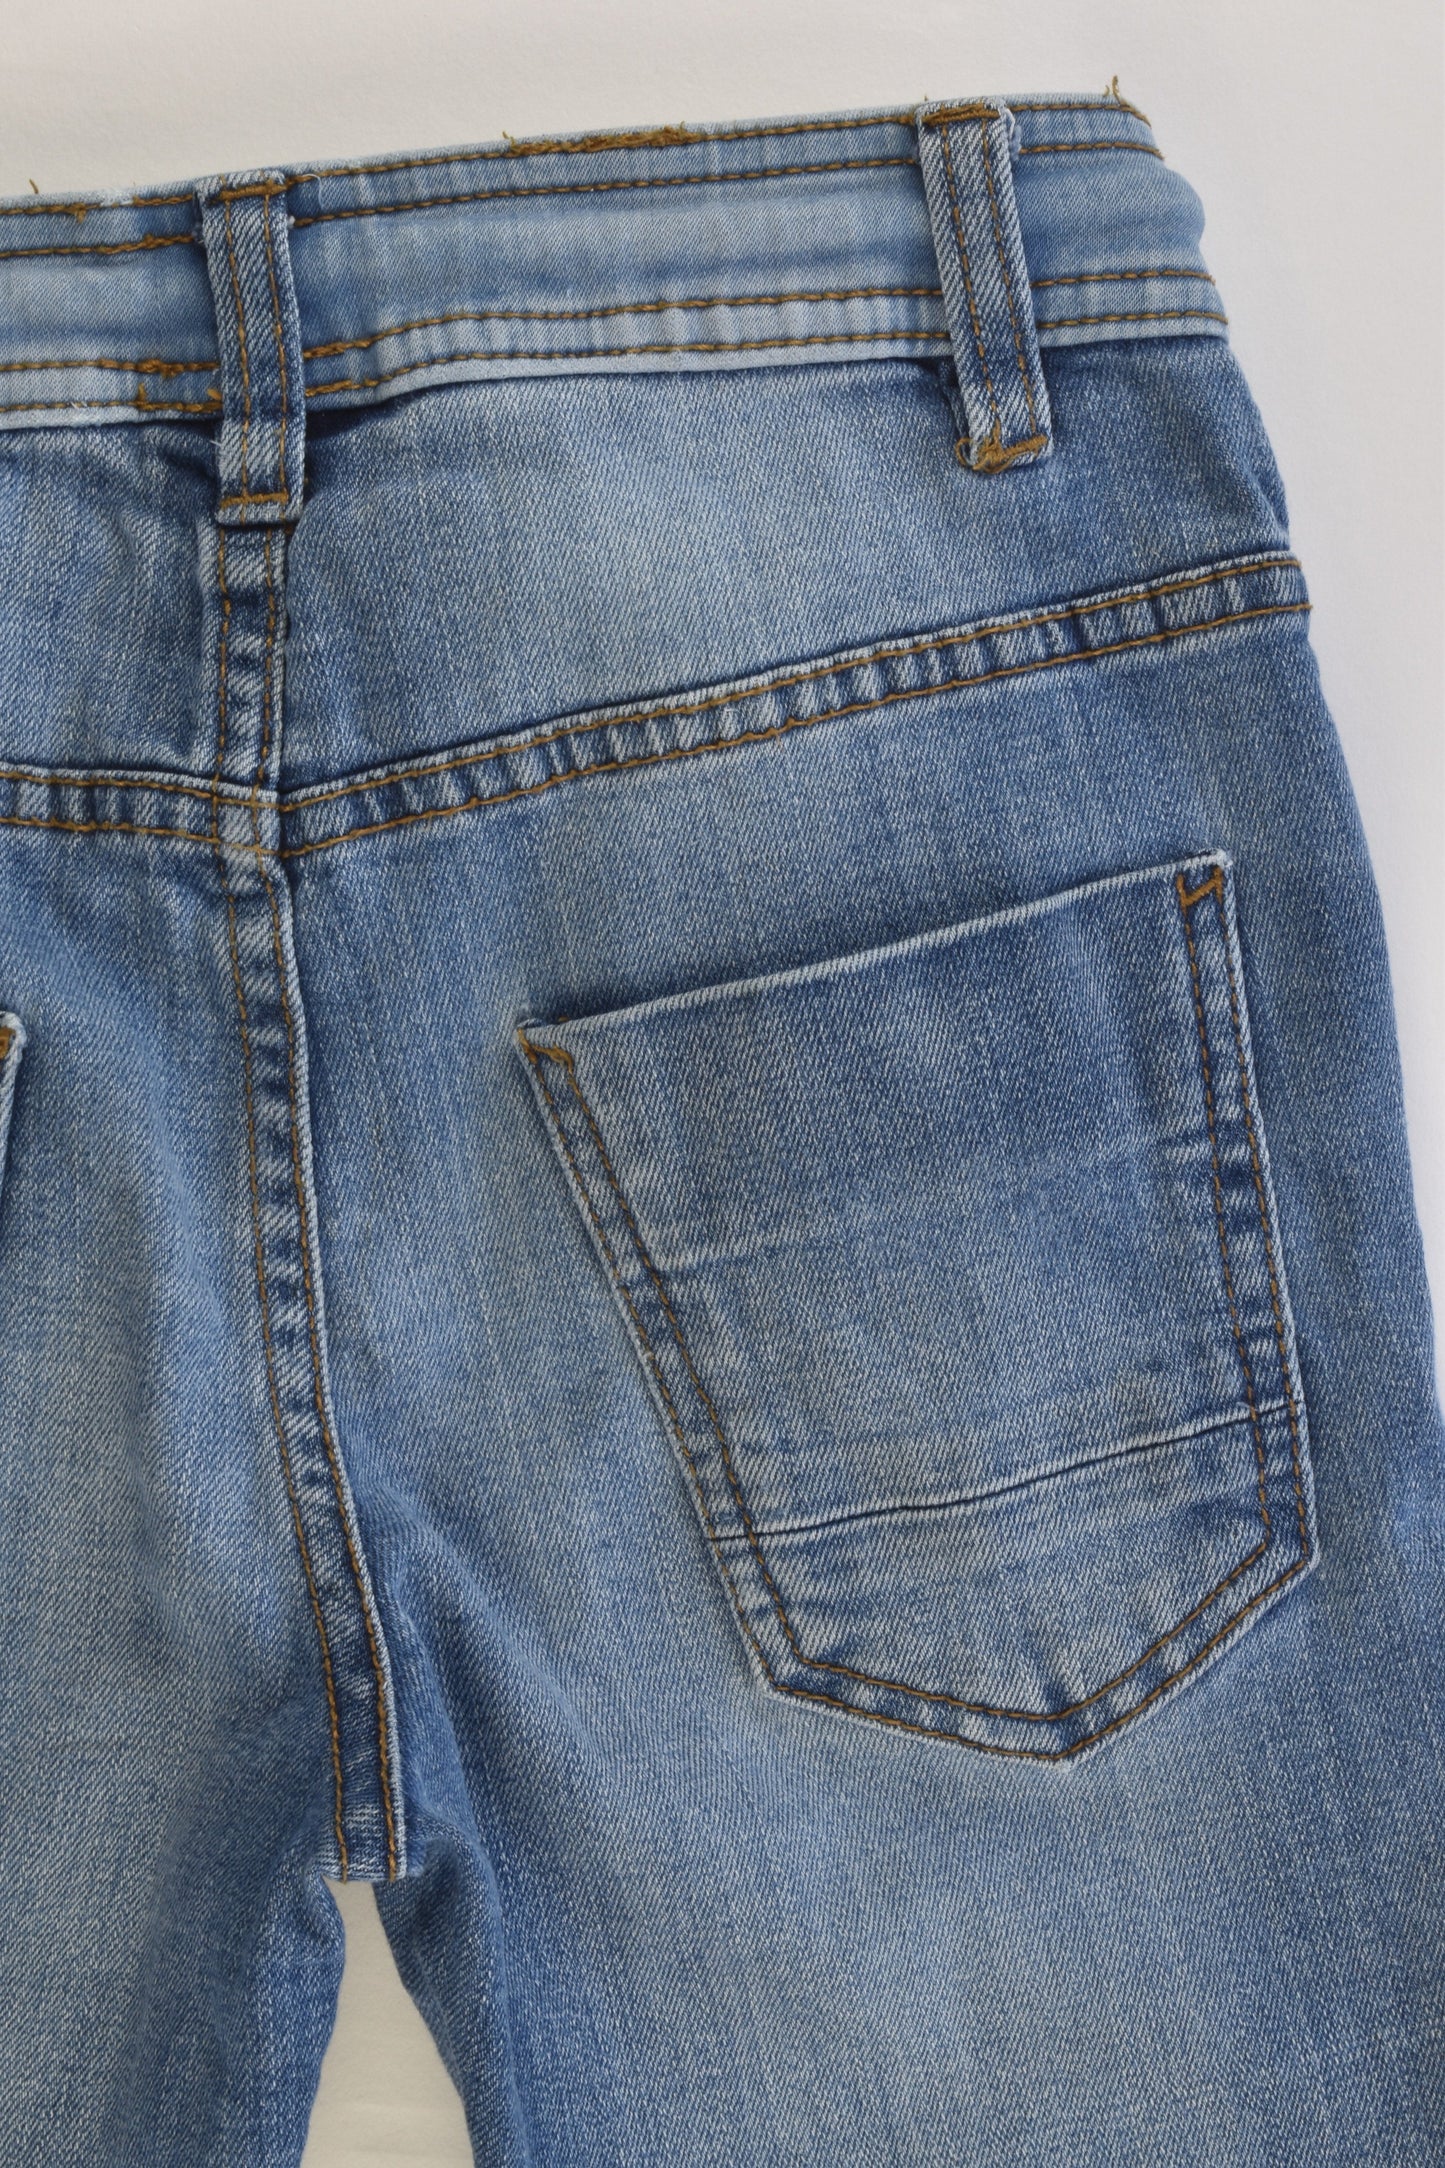 Zara Size 7 (122 cm) Denim Pants